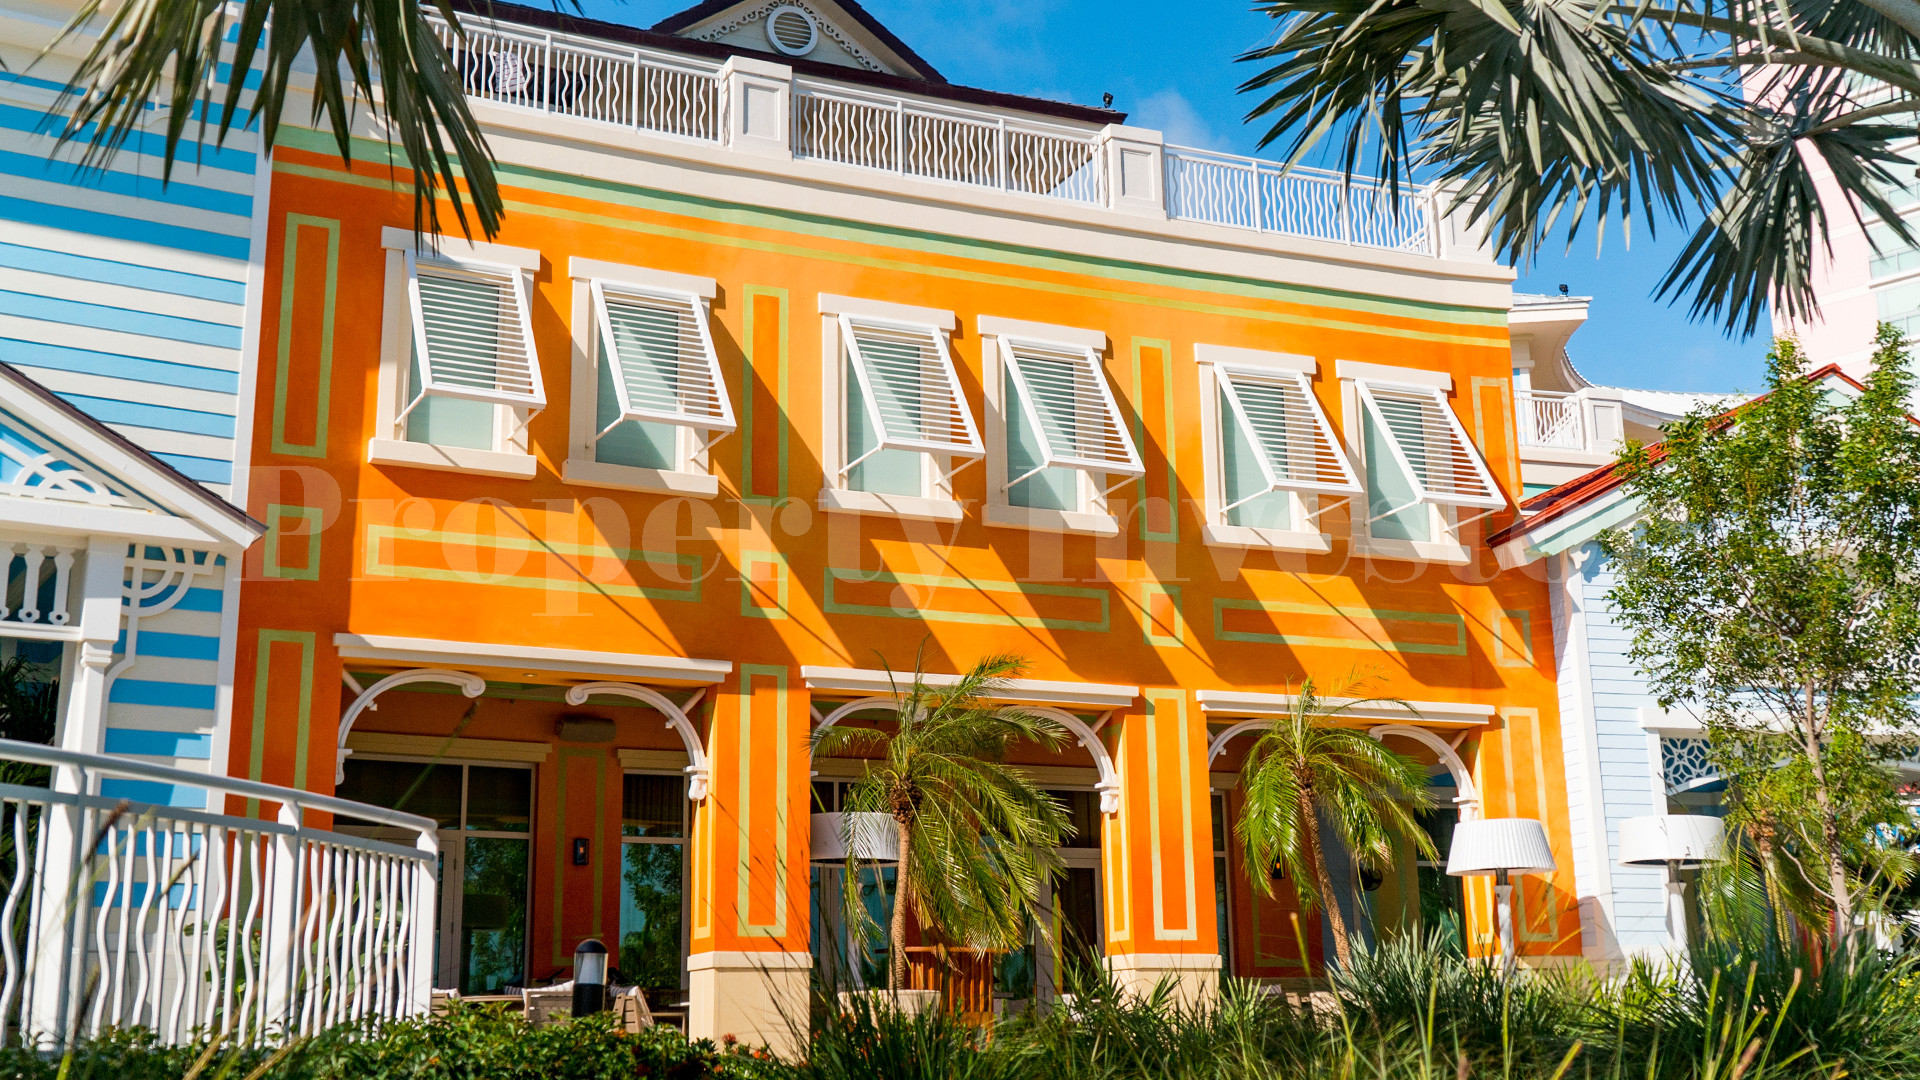 3 Bedroom Condo-Hotel Residence in the Bahamas (Residence 422)